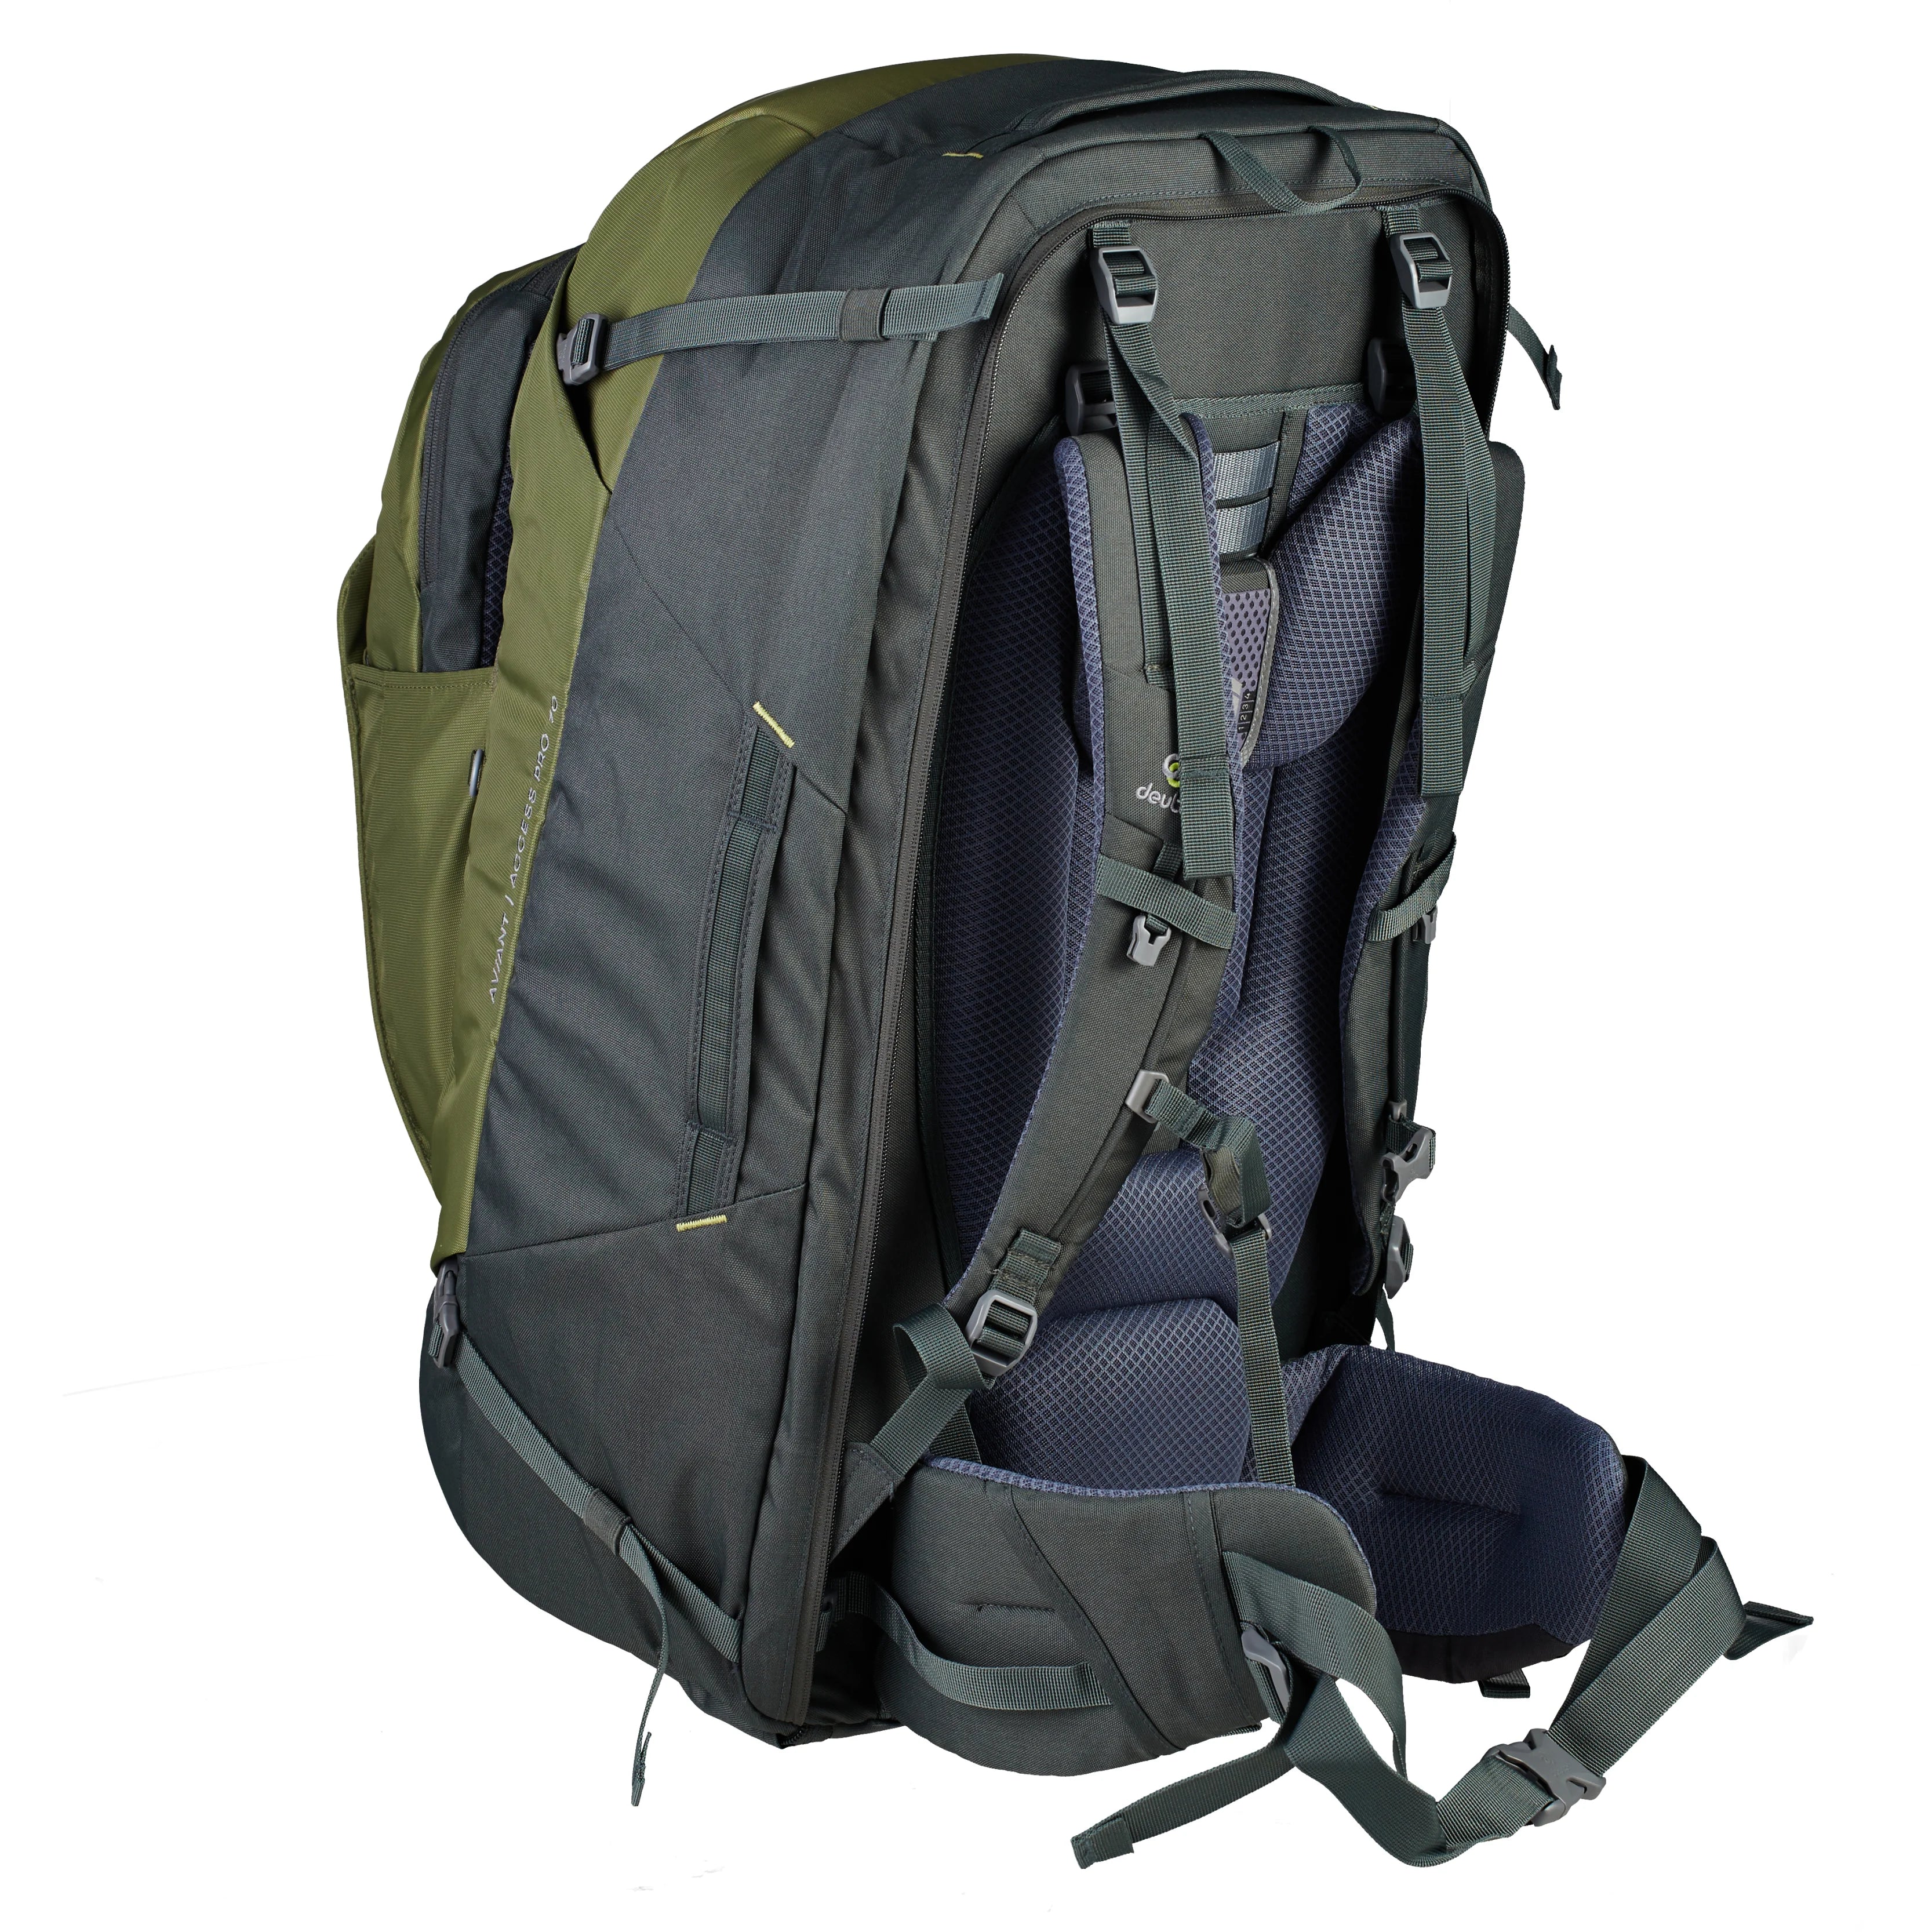 Deuter Travel Aviant Access Pro 70 Backpack 74 cm - Black